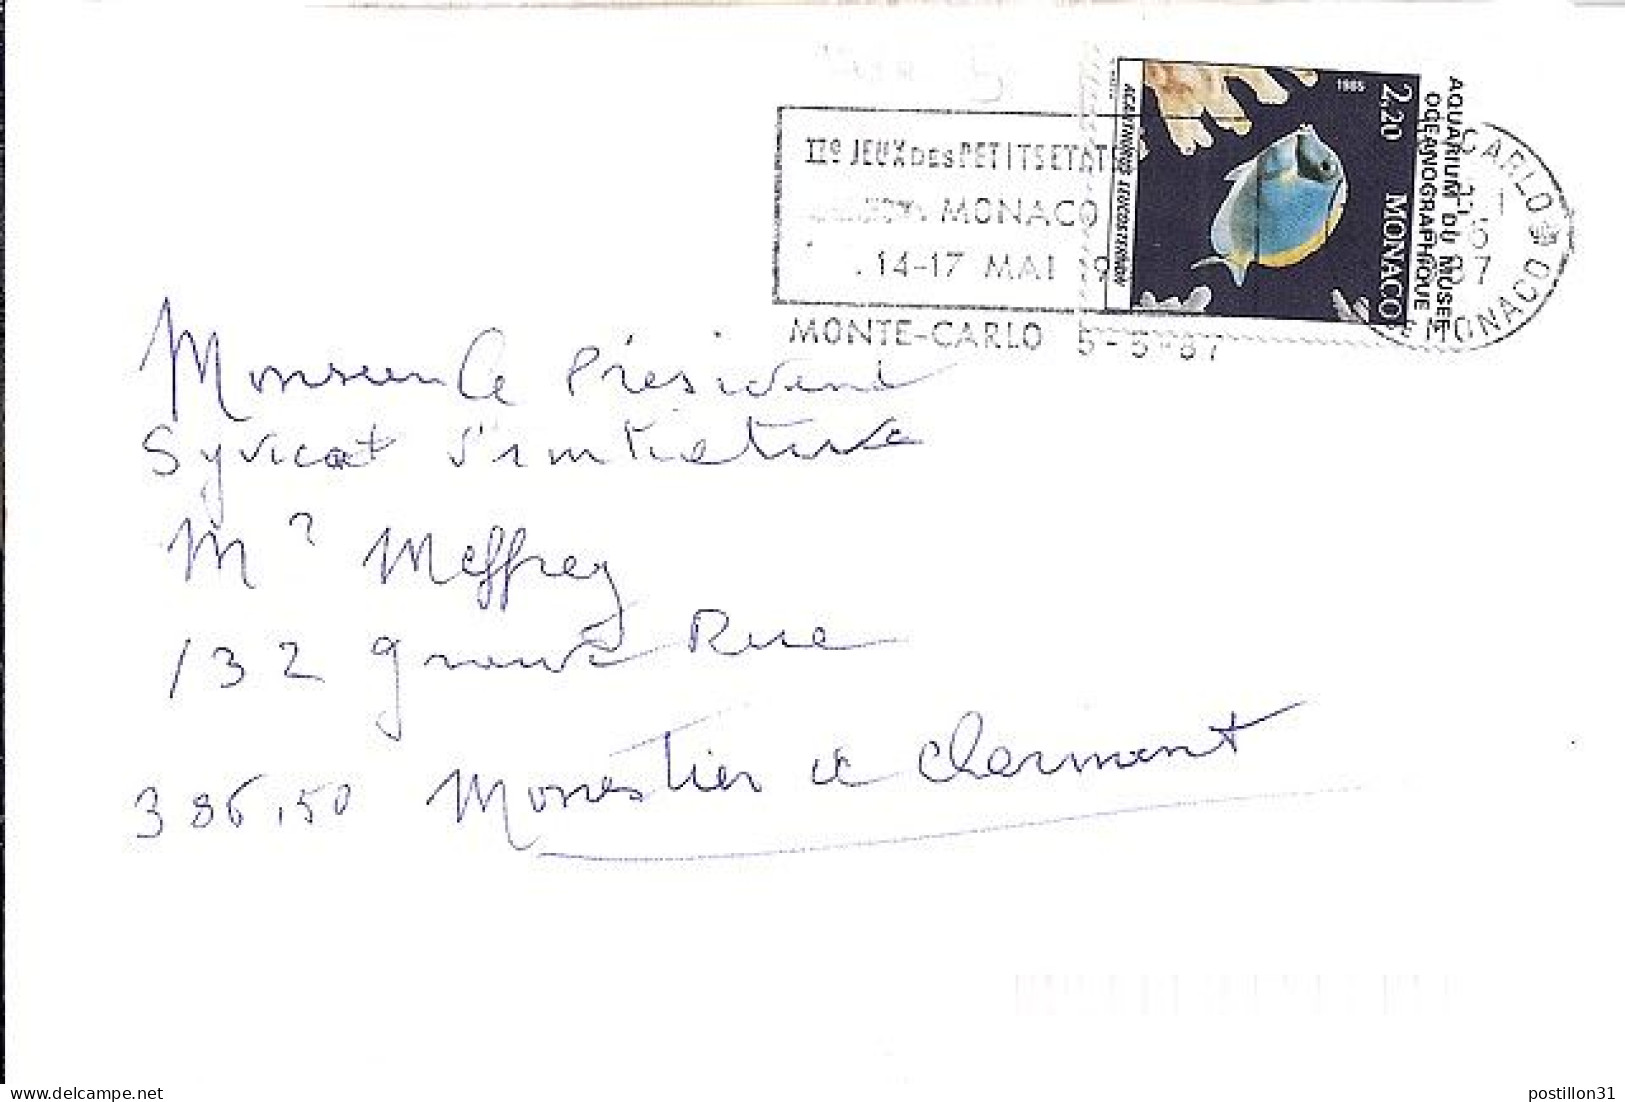 MONACO N° 1484 S/L. DE MONTE CARLO/5.5.87  POUR FRANCE - Briefe U. Dokumente